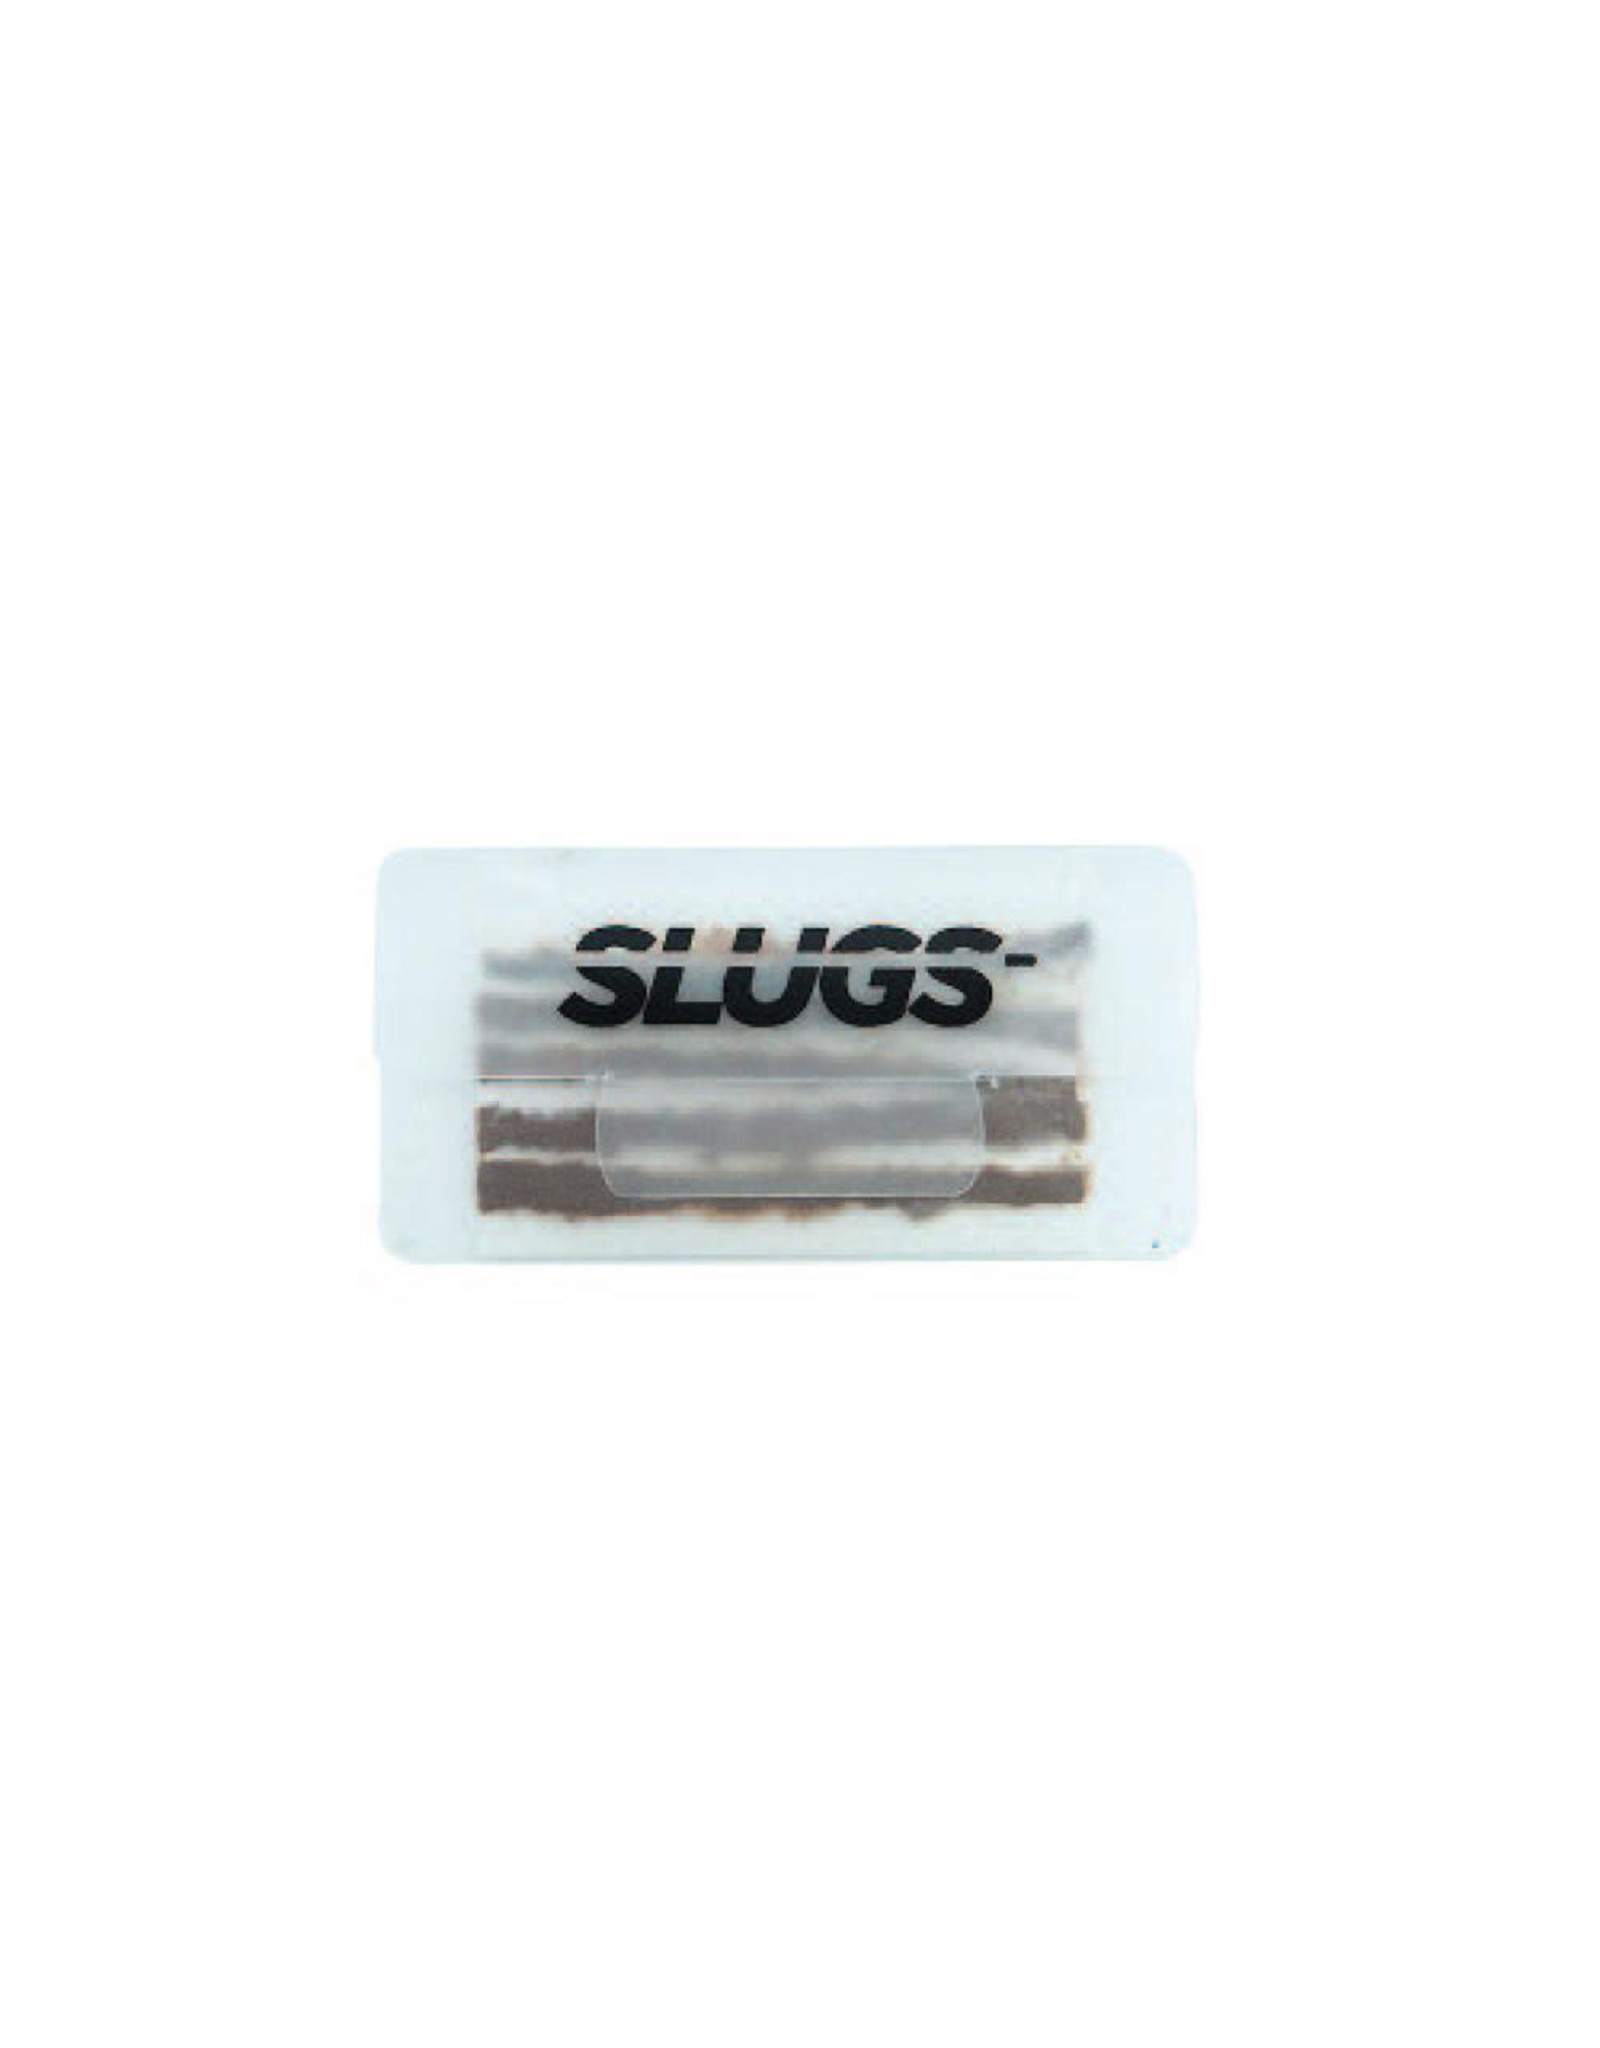 SLUG PLUG ENVELOPE CONTAINS 5 X 1.5MM SLUGS & 5 X 3.5MM SLUGS